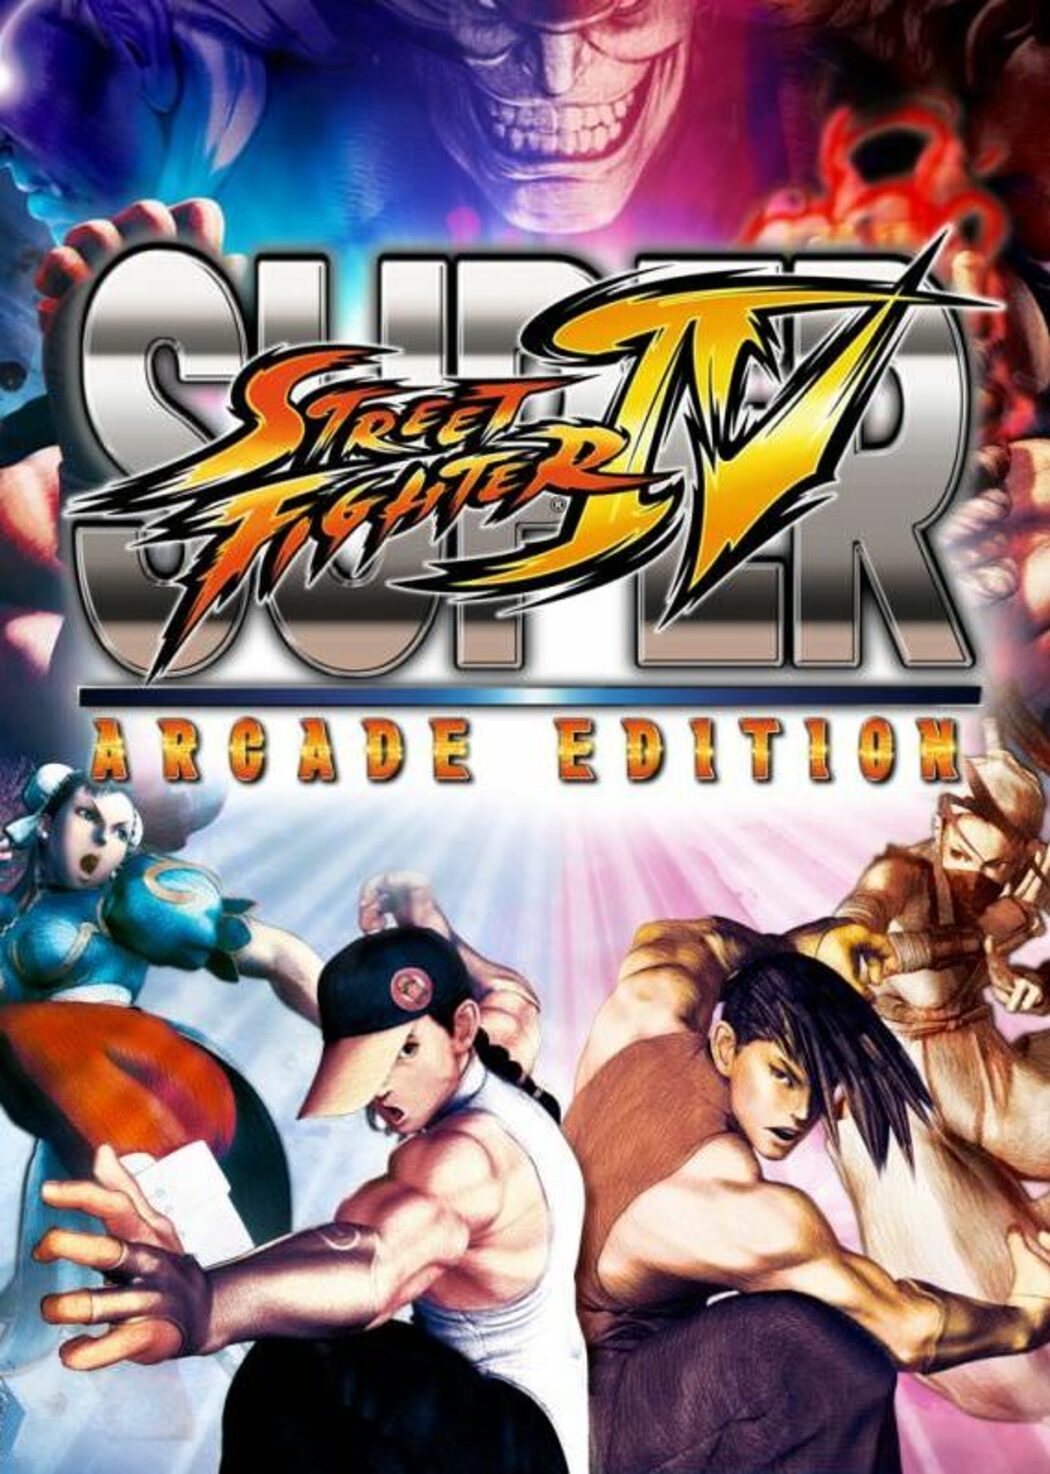 Super Street Fighter Iv Arcade Edition Steam Key Global